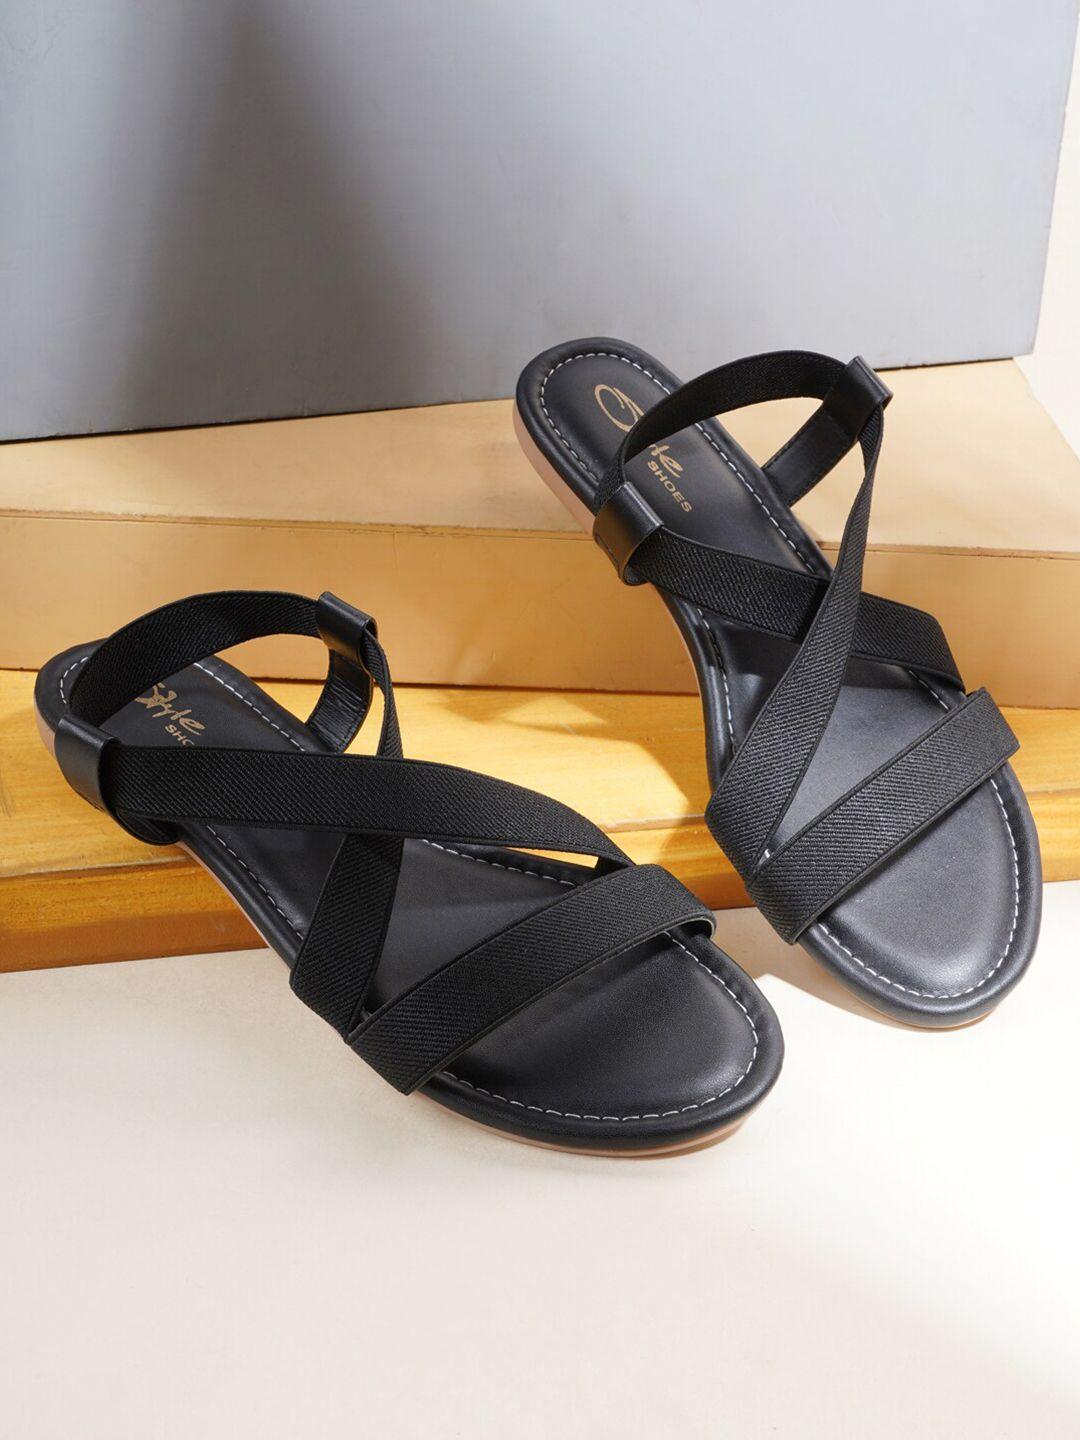 style-shoes-women-black-open-toe-flats-sandal